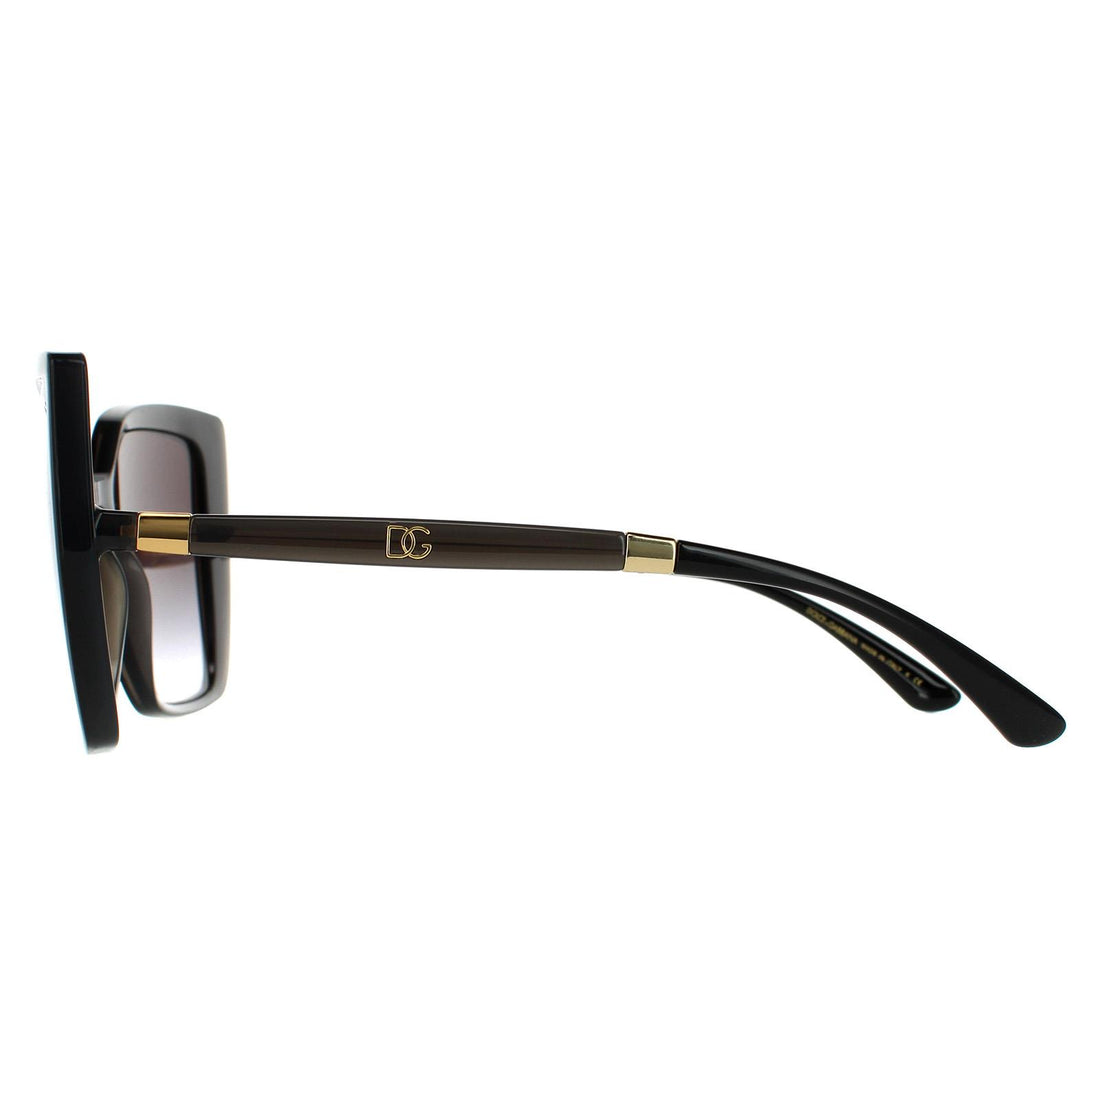 Dolce & Gabbana Sunglasses DG6138 32468G Black On Transparent Grey Dark Grey Gradient